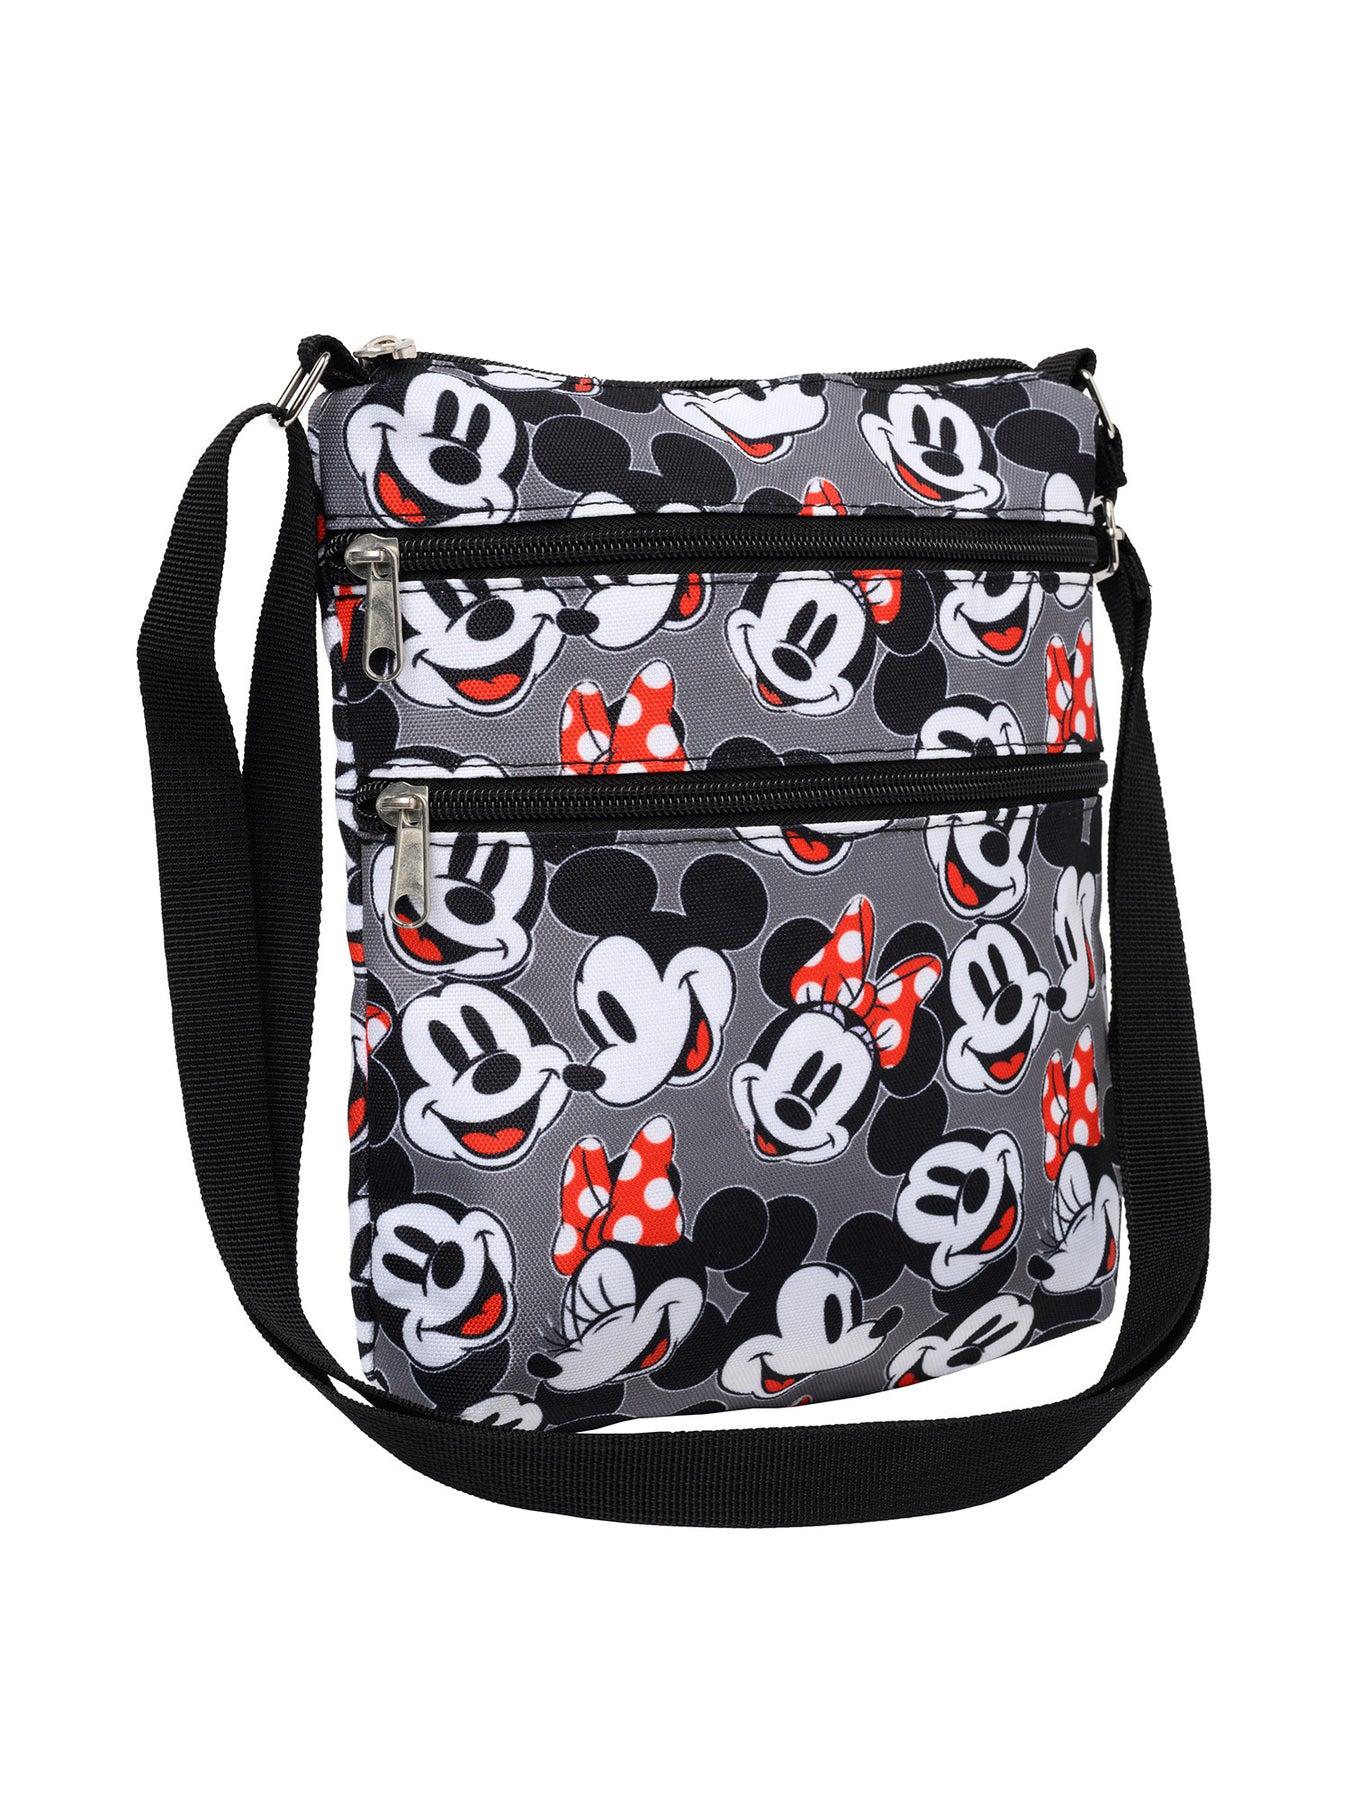 Disney 50th Mickey Mouse and Friends Crossbody Bag by COACH – Walt Disney  World | The Disney Shoppers